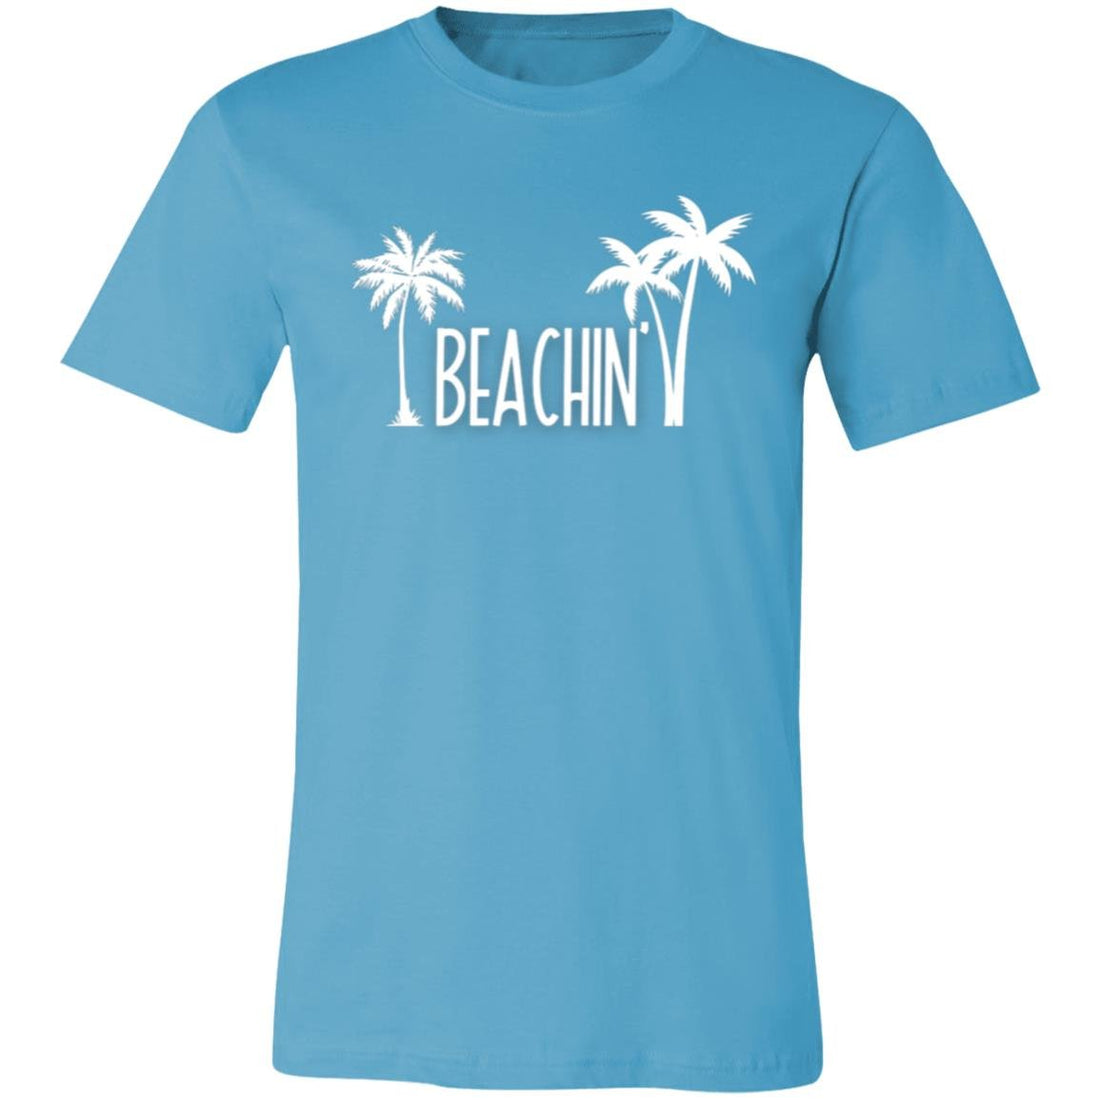 Beachin' T-Shirt - T-Shirts - Positively Sassy - Beachin' T-Shirt